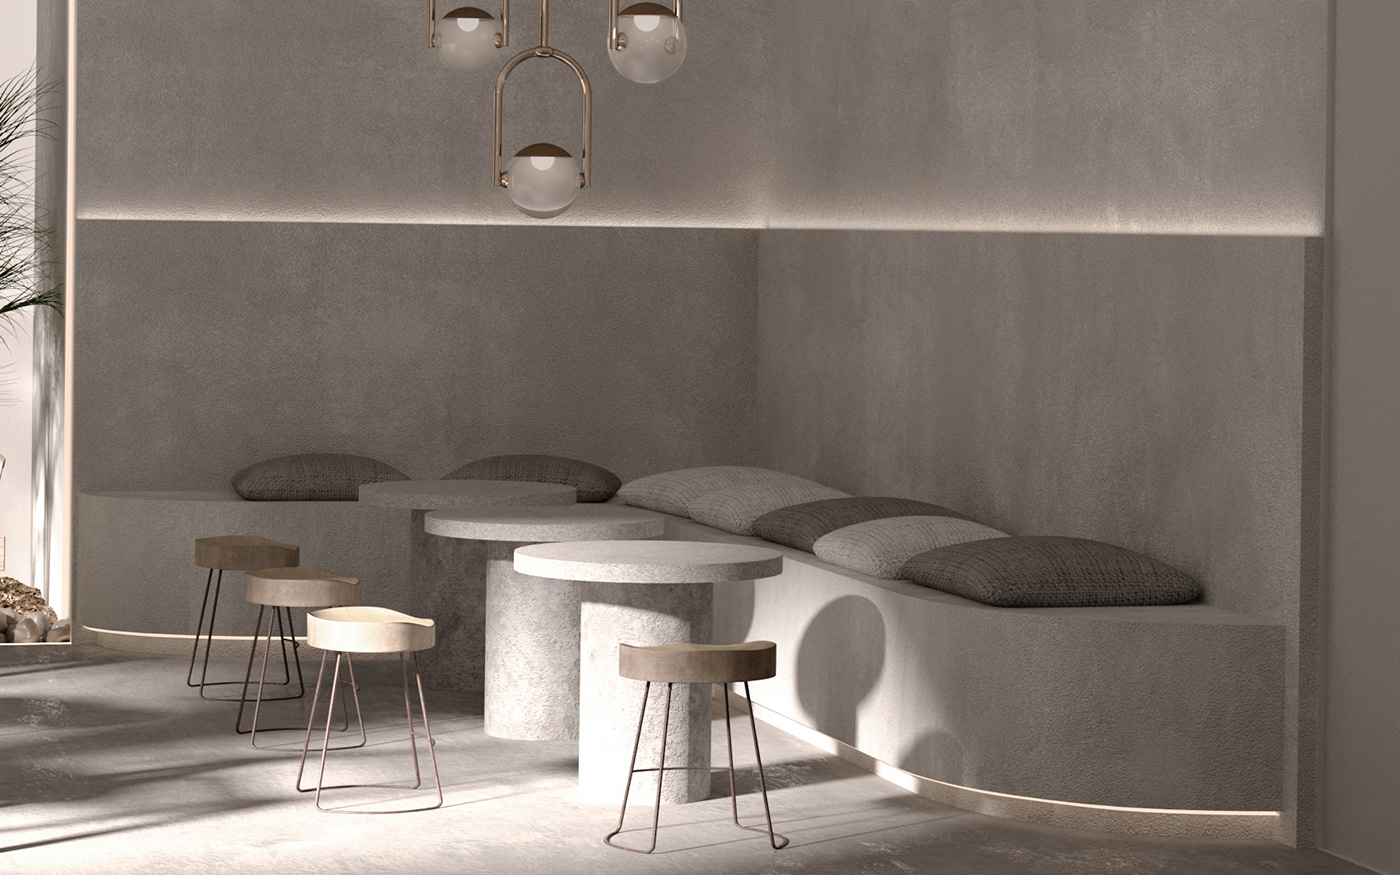 3ds max archviz arhitecture CGI corona Interior interior design  Render visualization Coffee